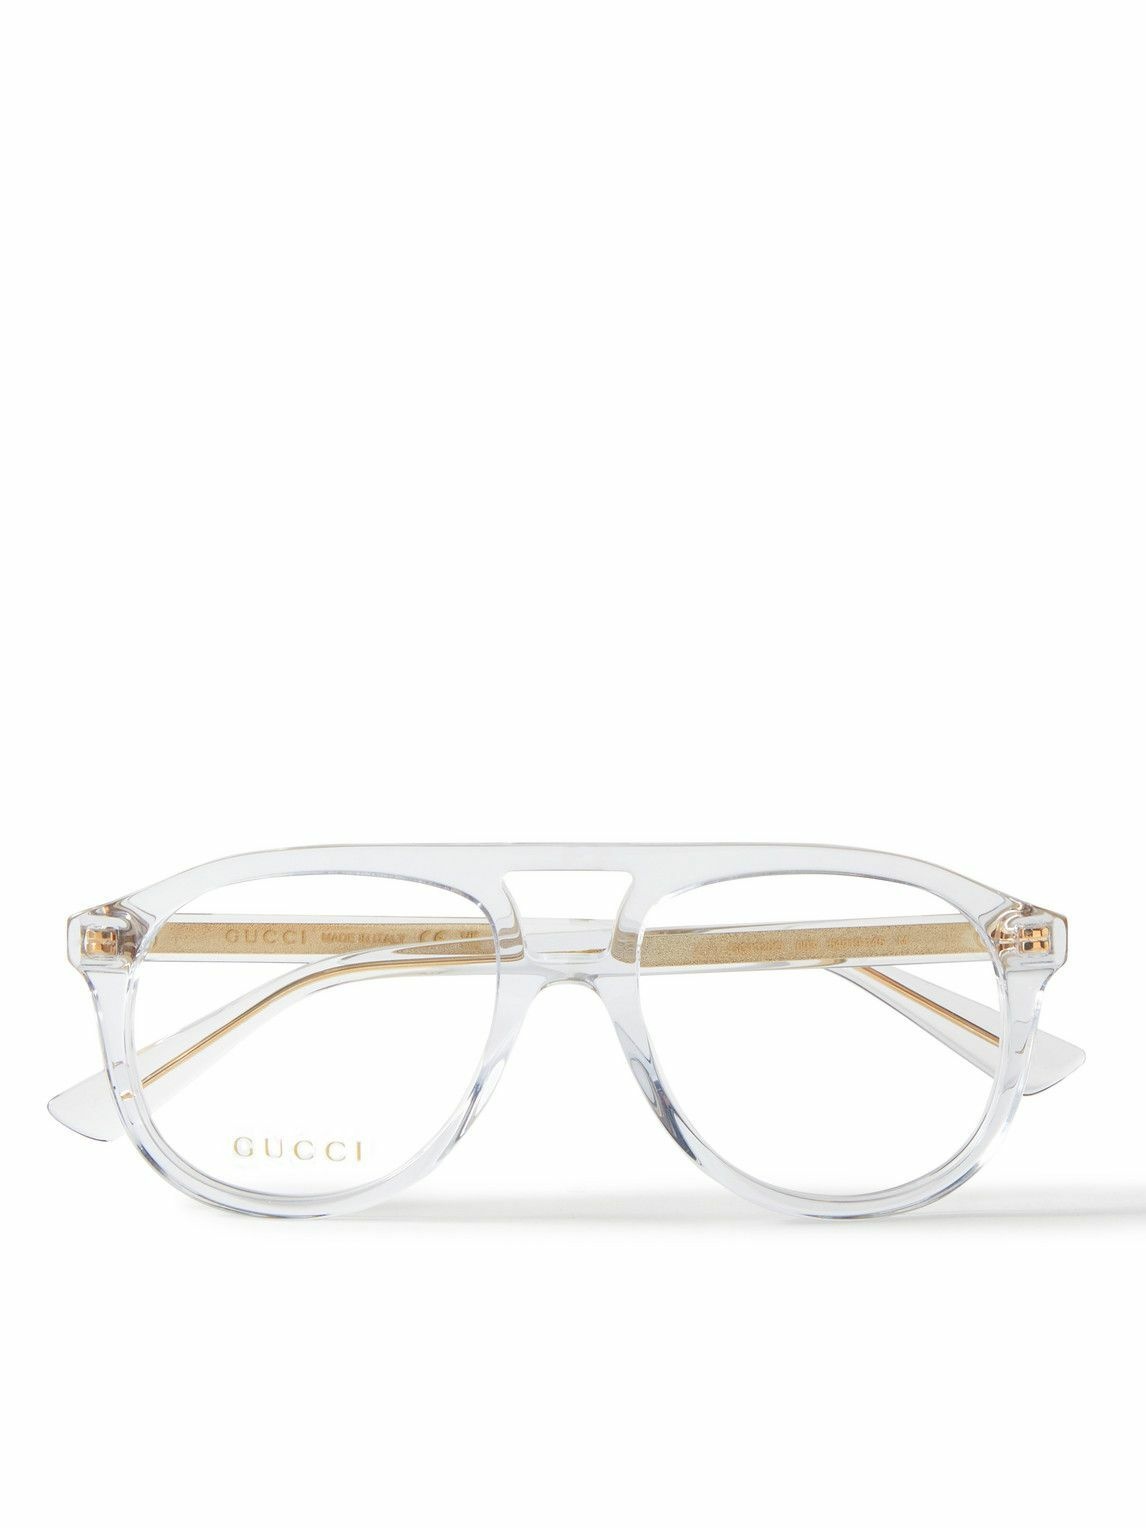 Gucci Eyewear - '80s Monaco Aviator-Style Acetate Optical Glasses Gucci